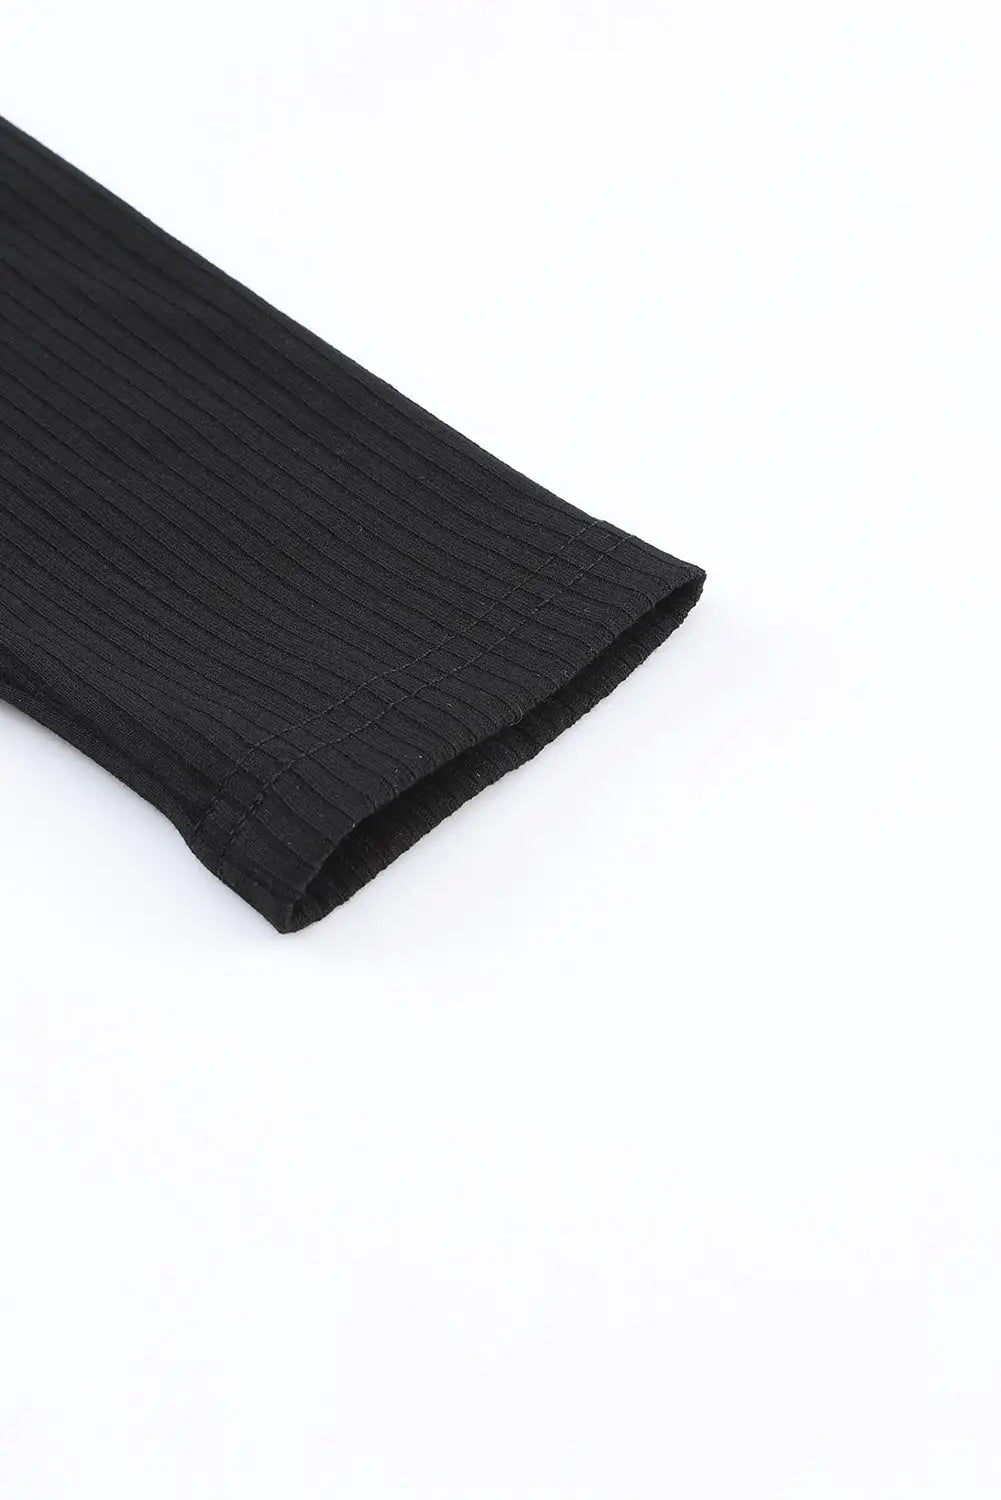 Black solid color ribbed crop top long pants set -